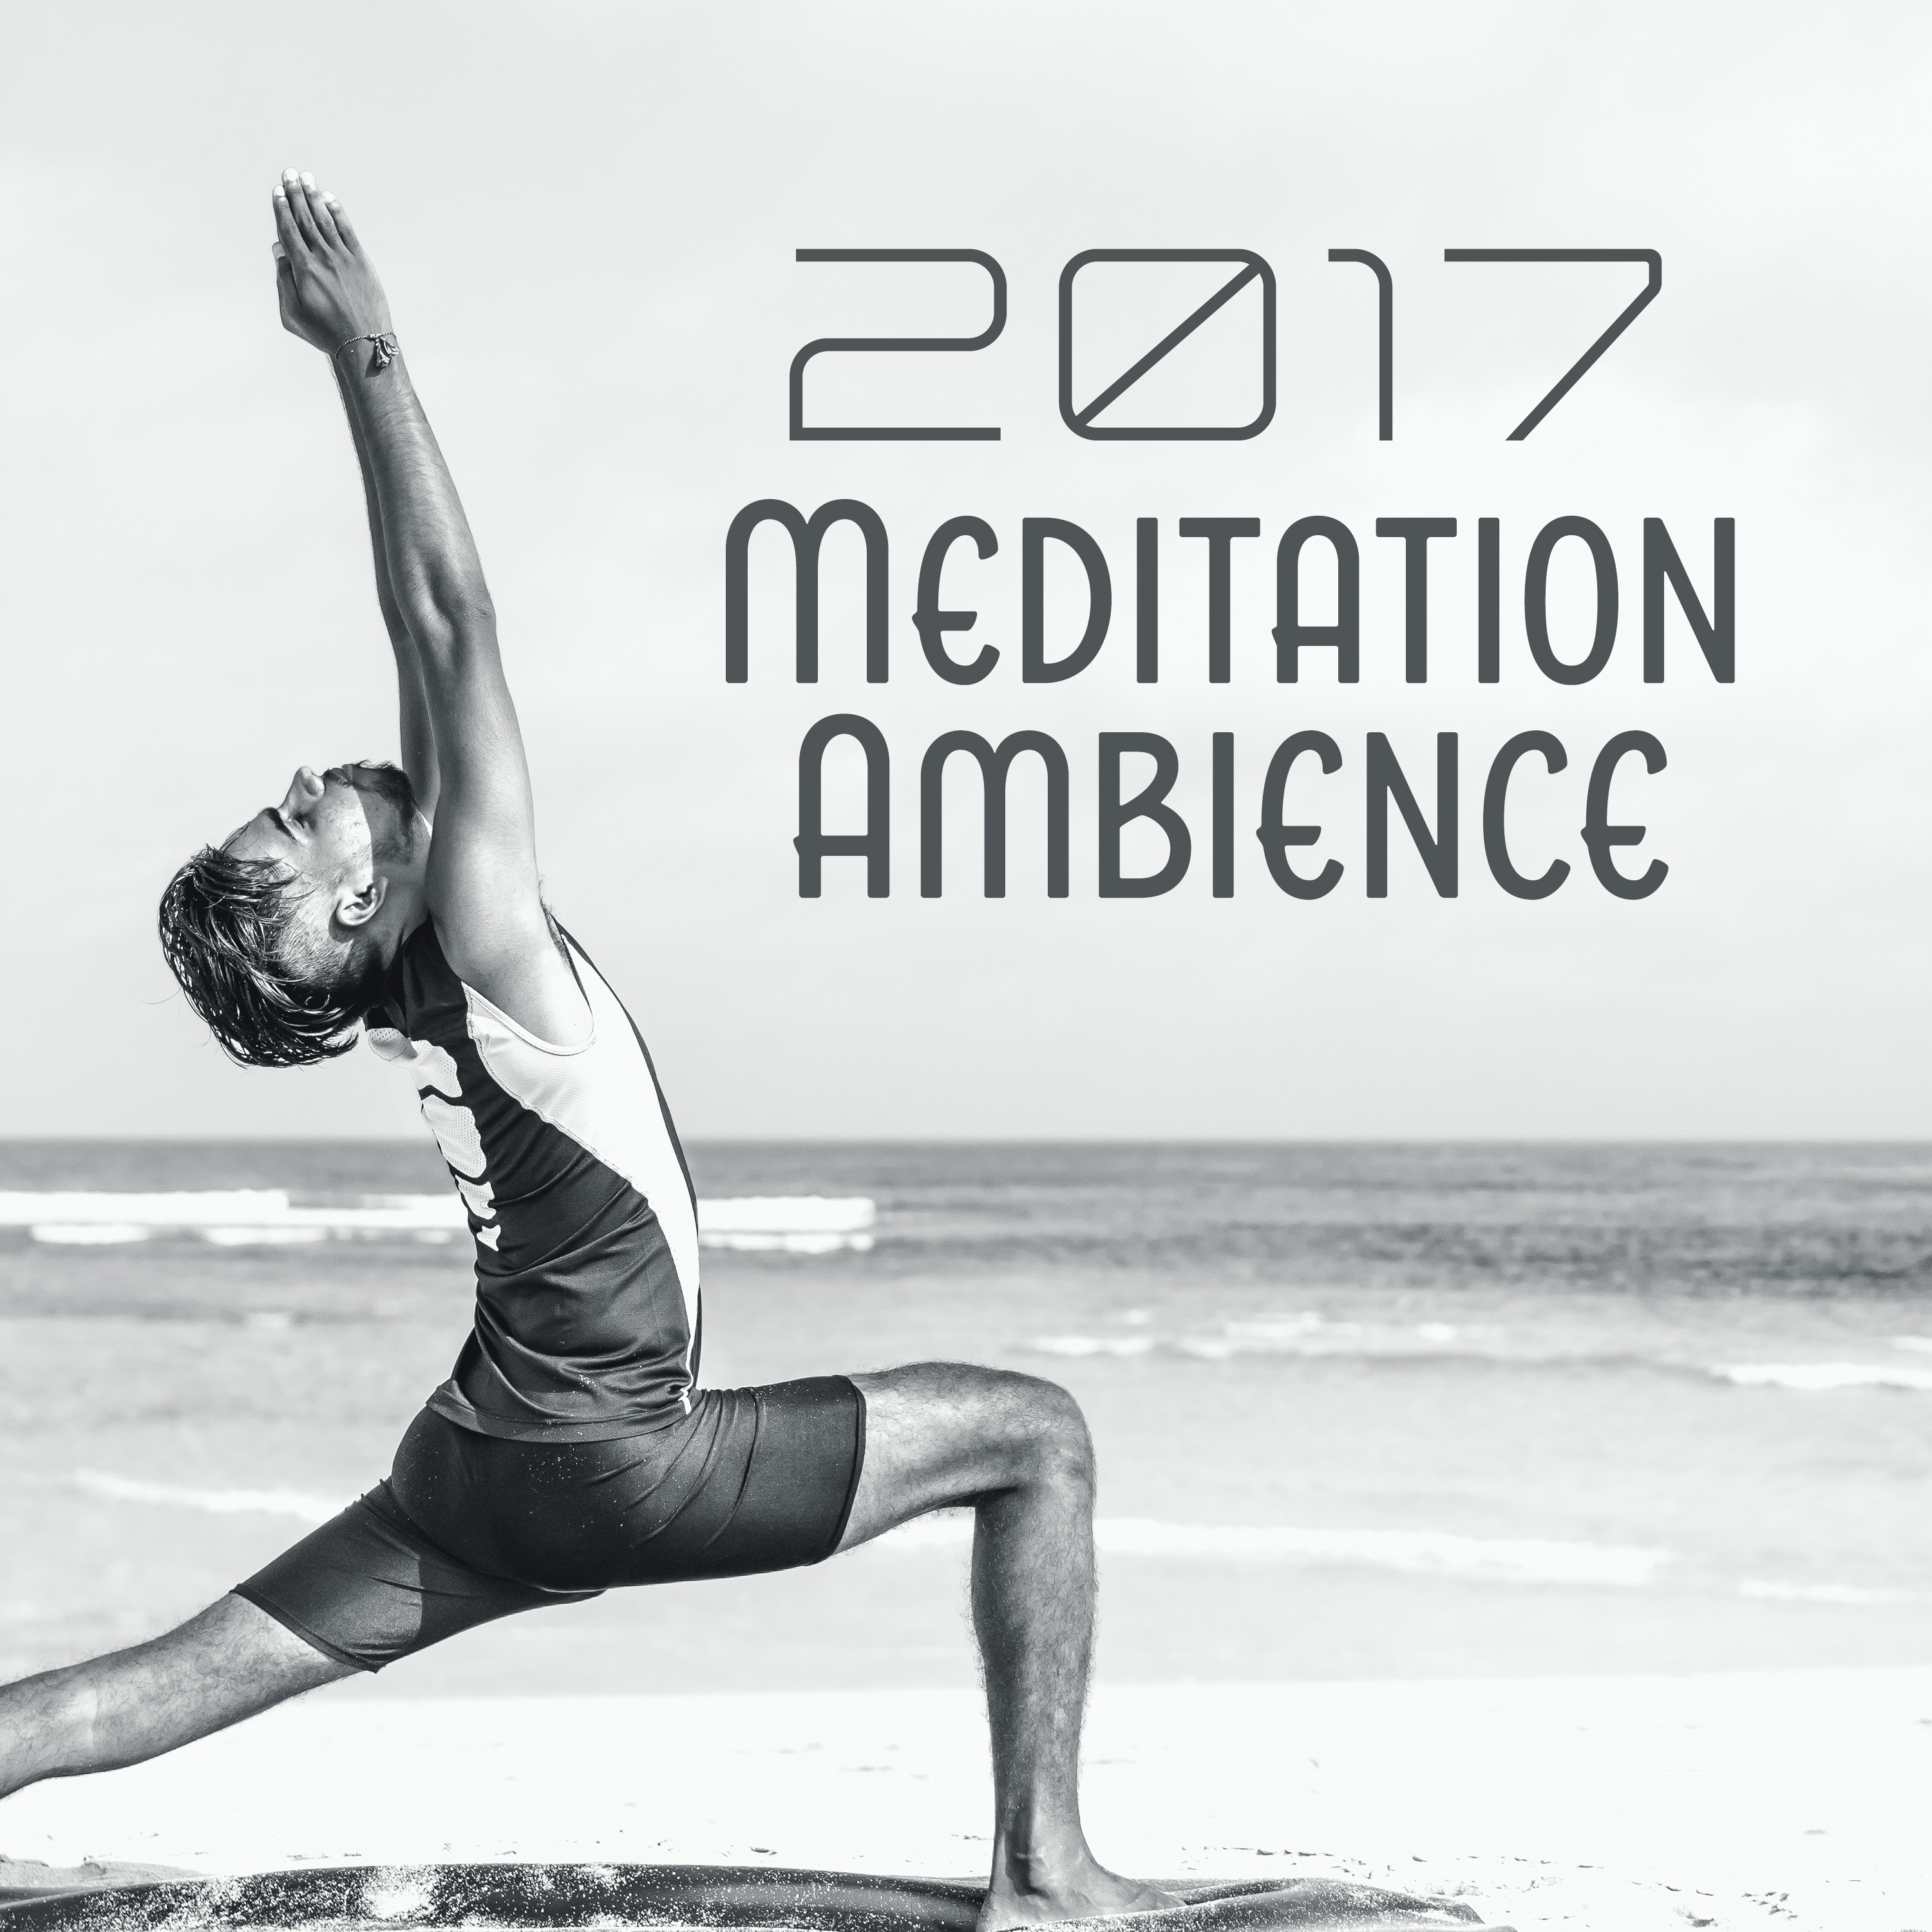 2017 Meditation Ambience